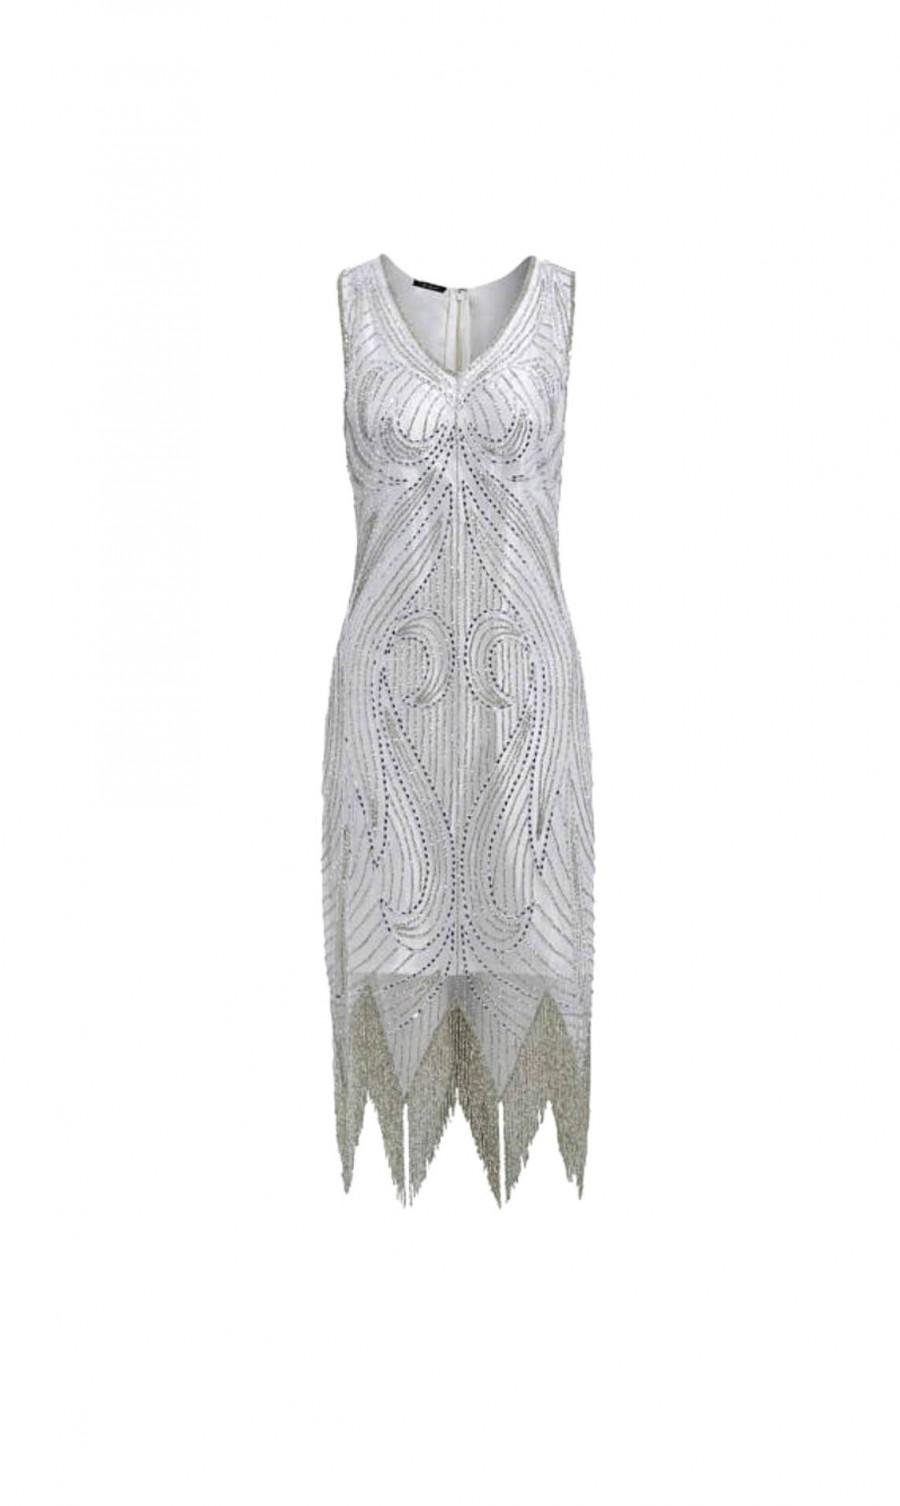 Hochzeit - Foxy Embellished Dress, 1920s Great Gatsby Style, Wedding Reception, Silver Tassel Flapper, White Bridesmaid Party Dress, Plus Size, S-XXXL